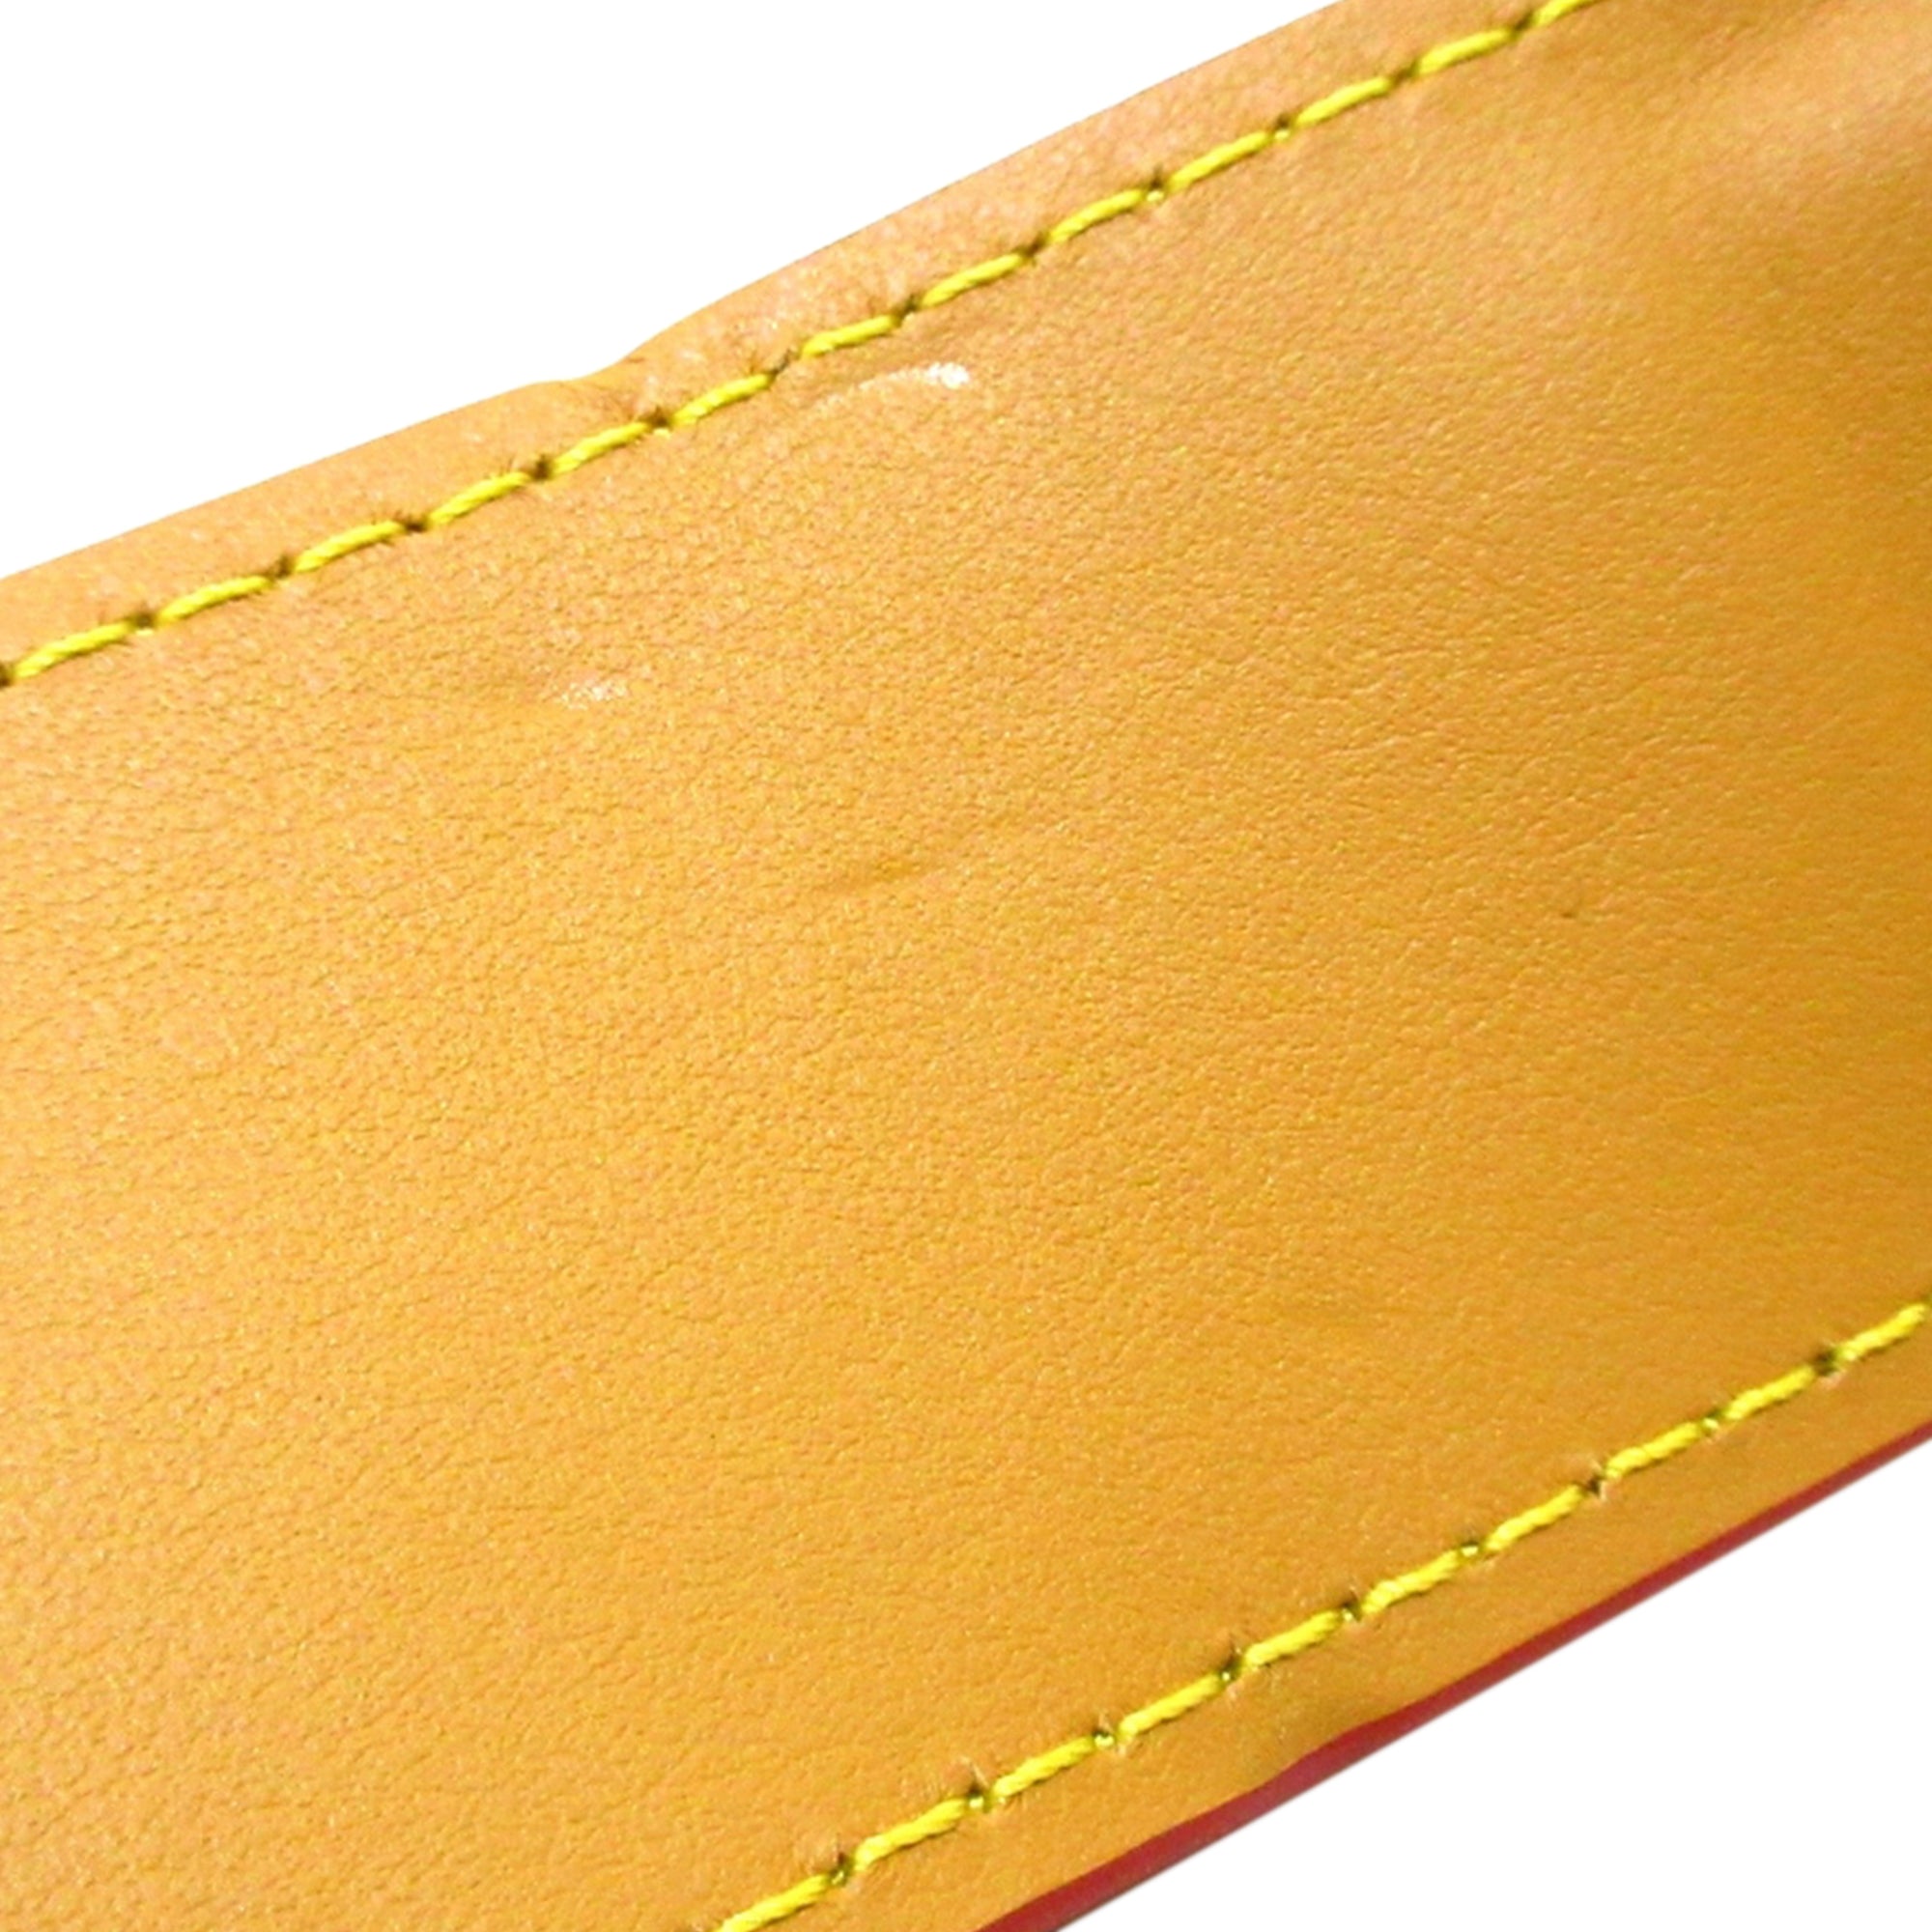 Louis Vuitton Hobo Cruiser PM M46241 leather canvas bag blurry